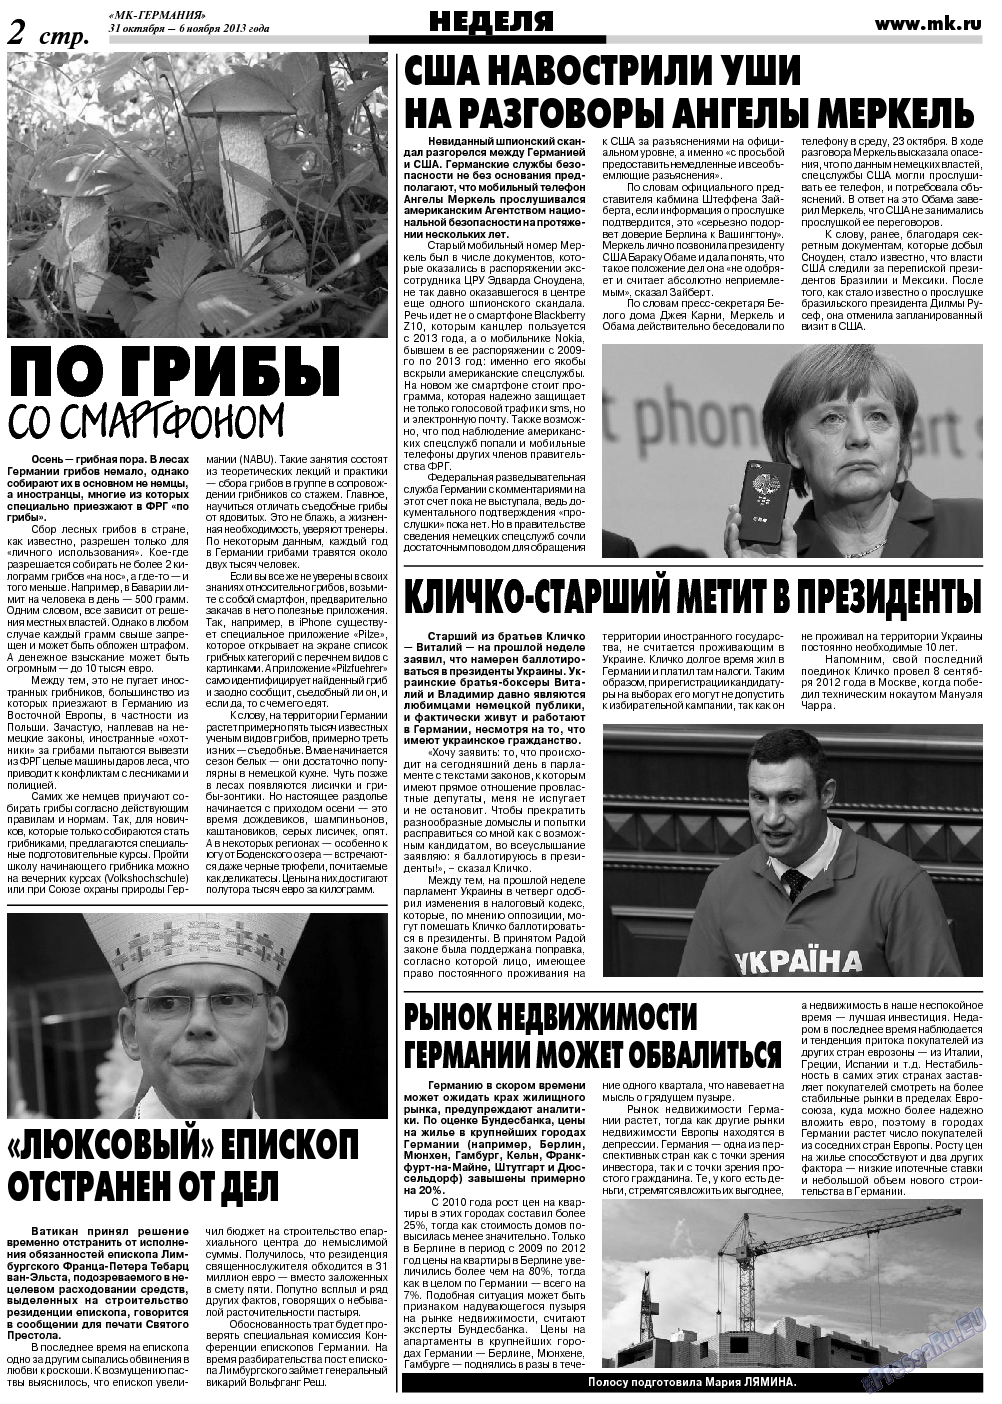 МК-Германия, газета. 2013 №44 стр.2